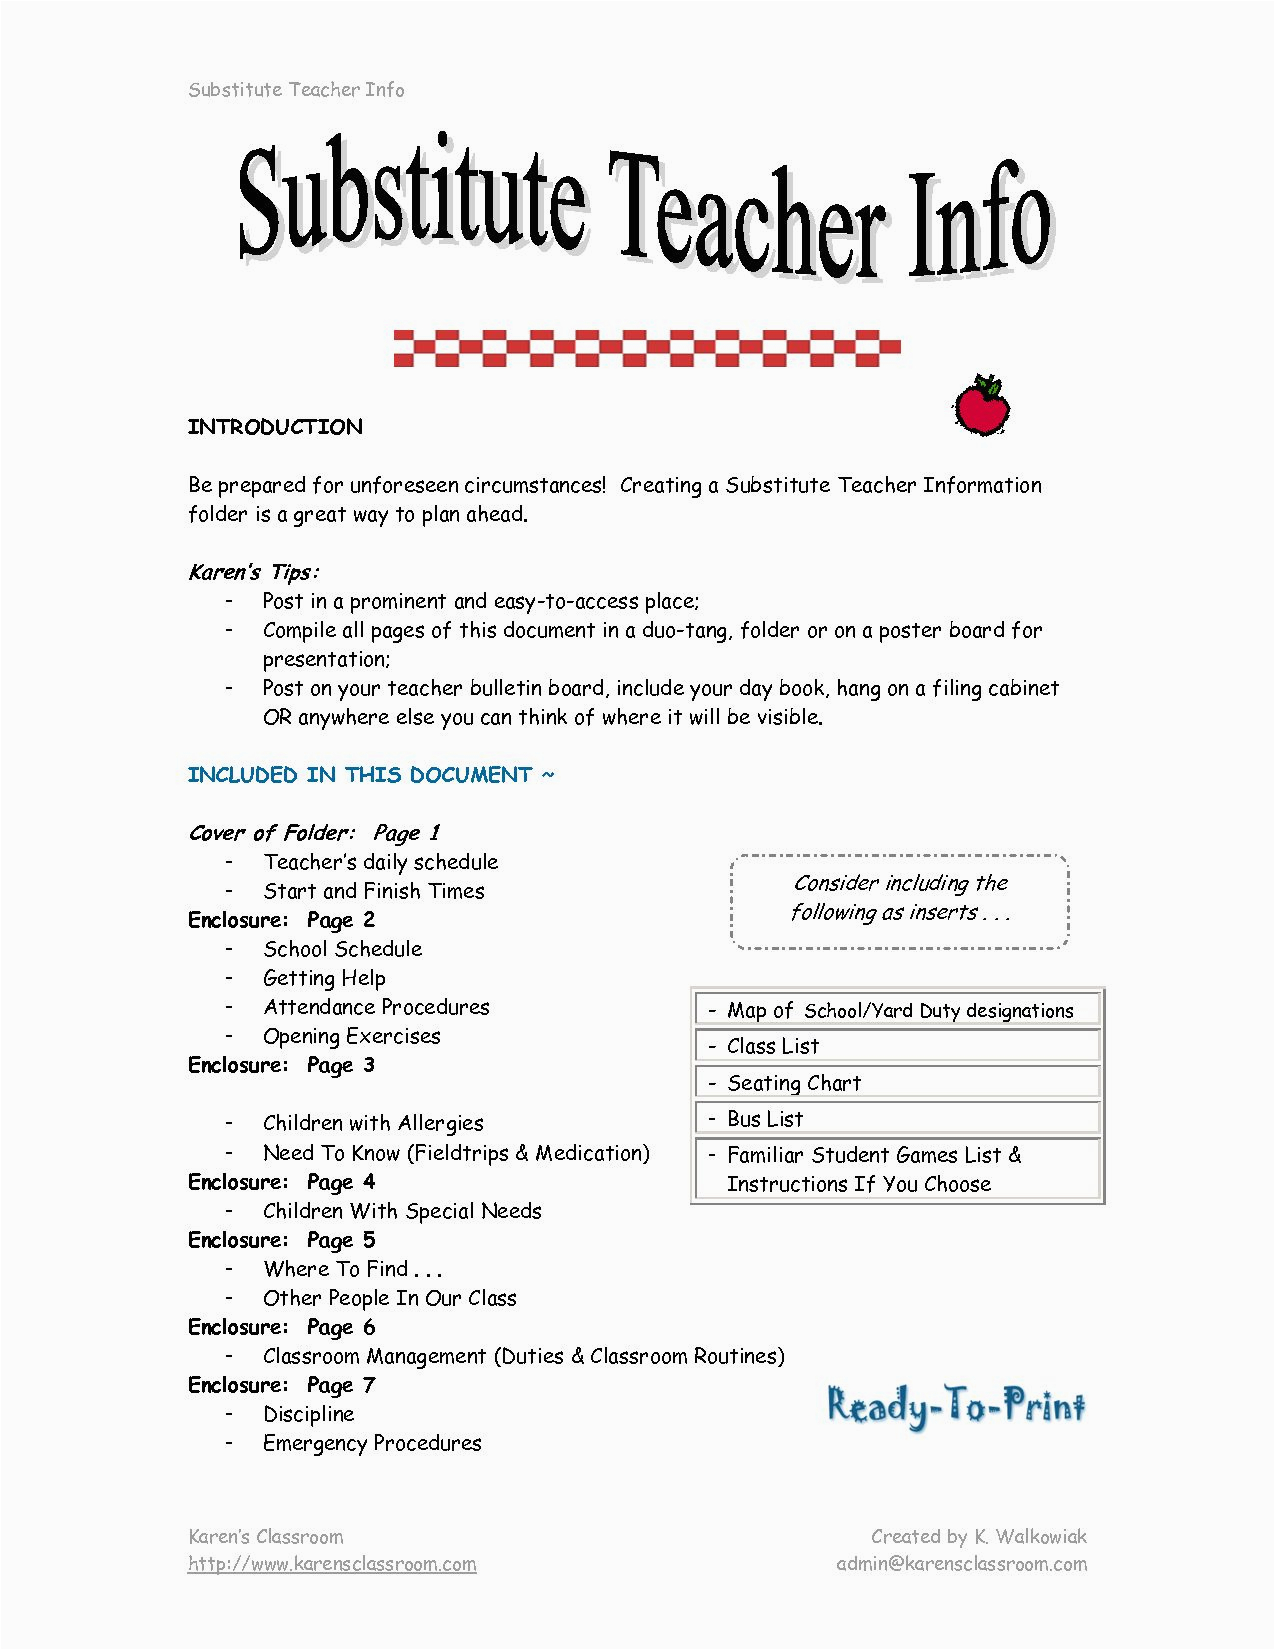 Sample Resume for Preschool Substitue Teacher assistant Teaching Job Description Resume Inspirational Substitute Classroom Job